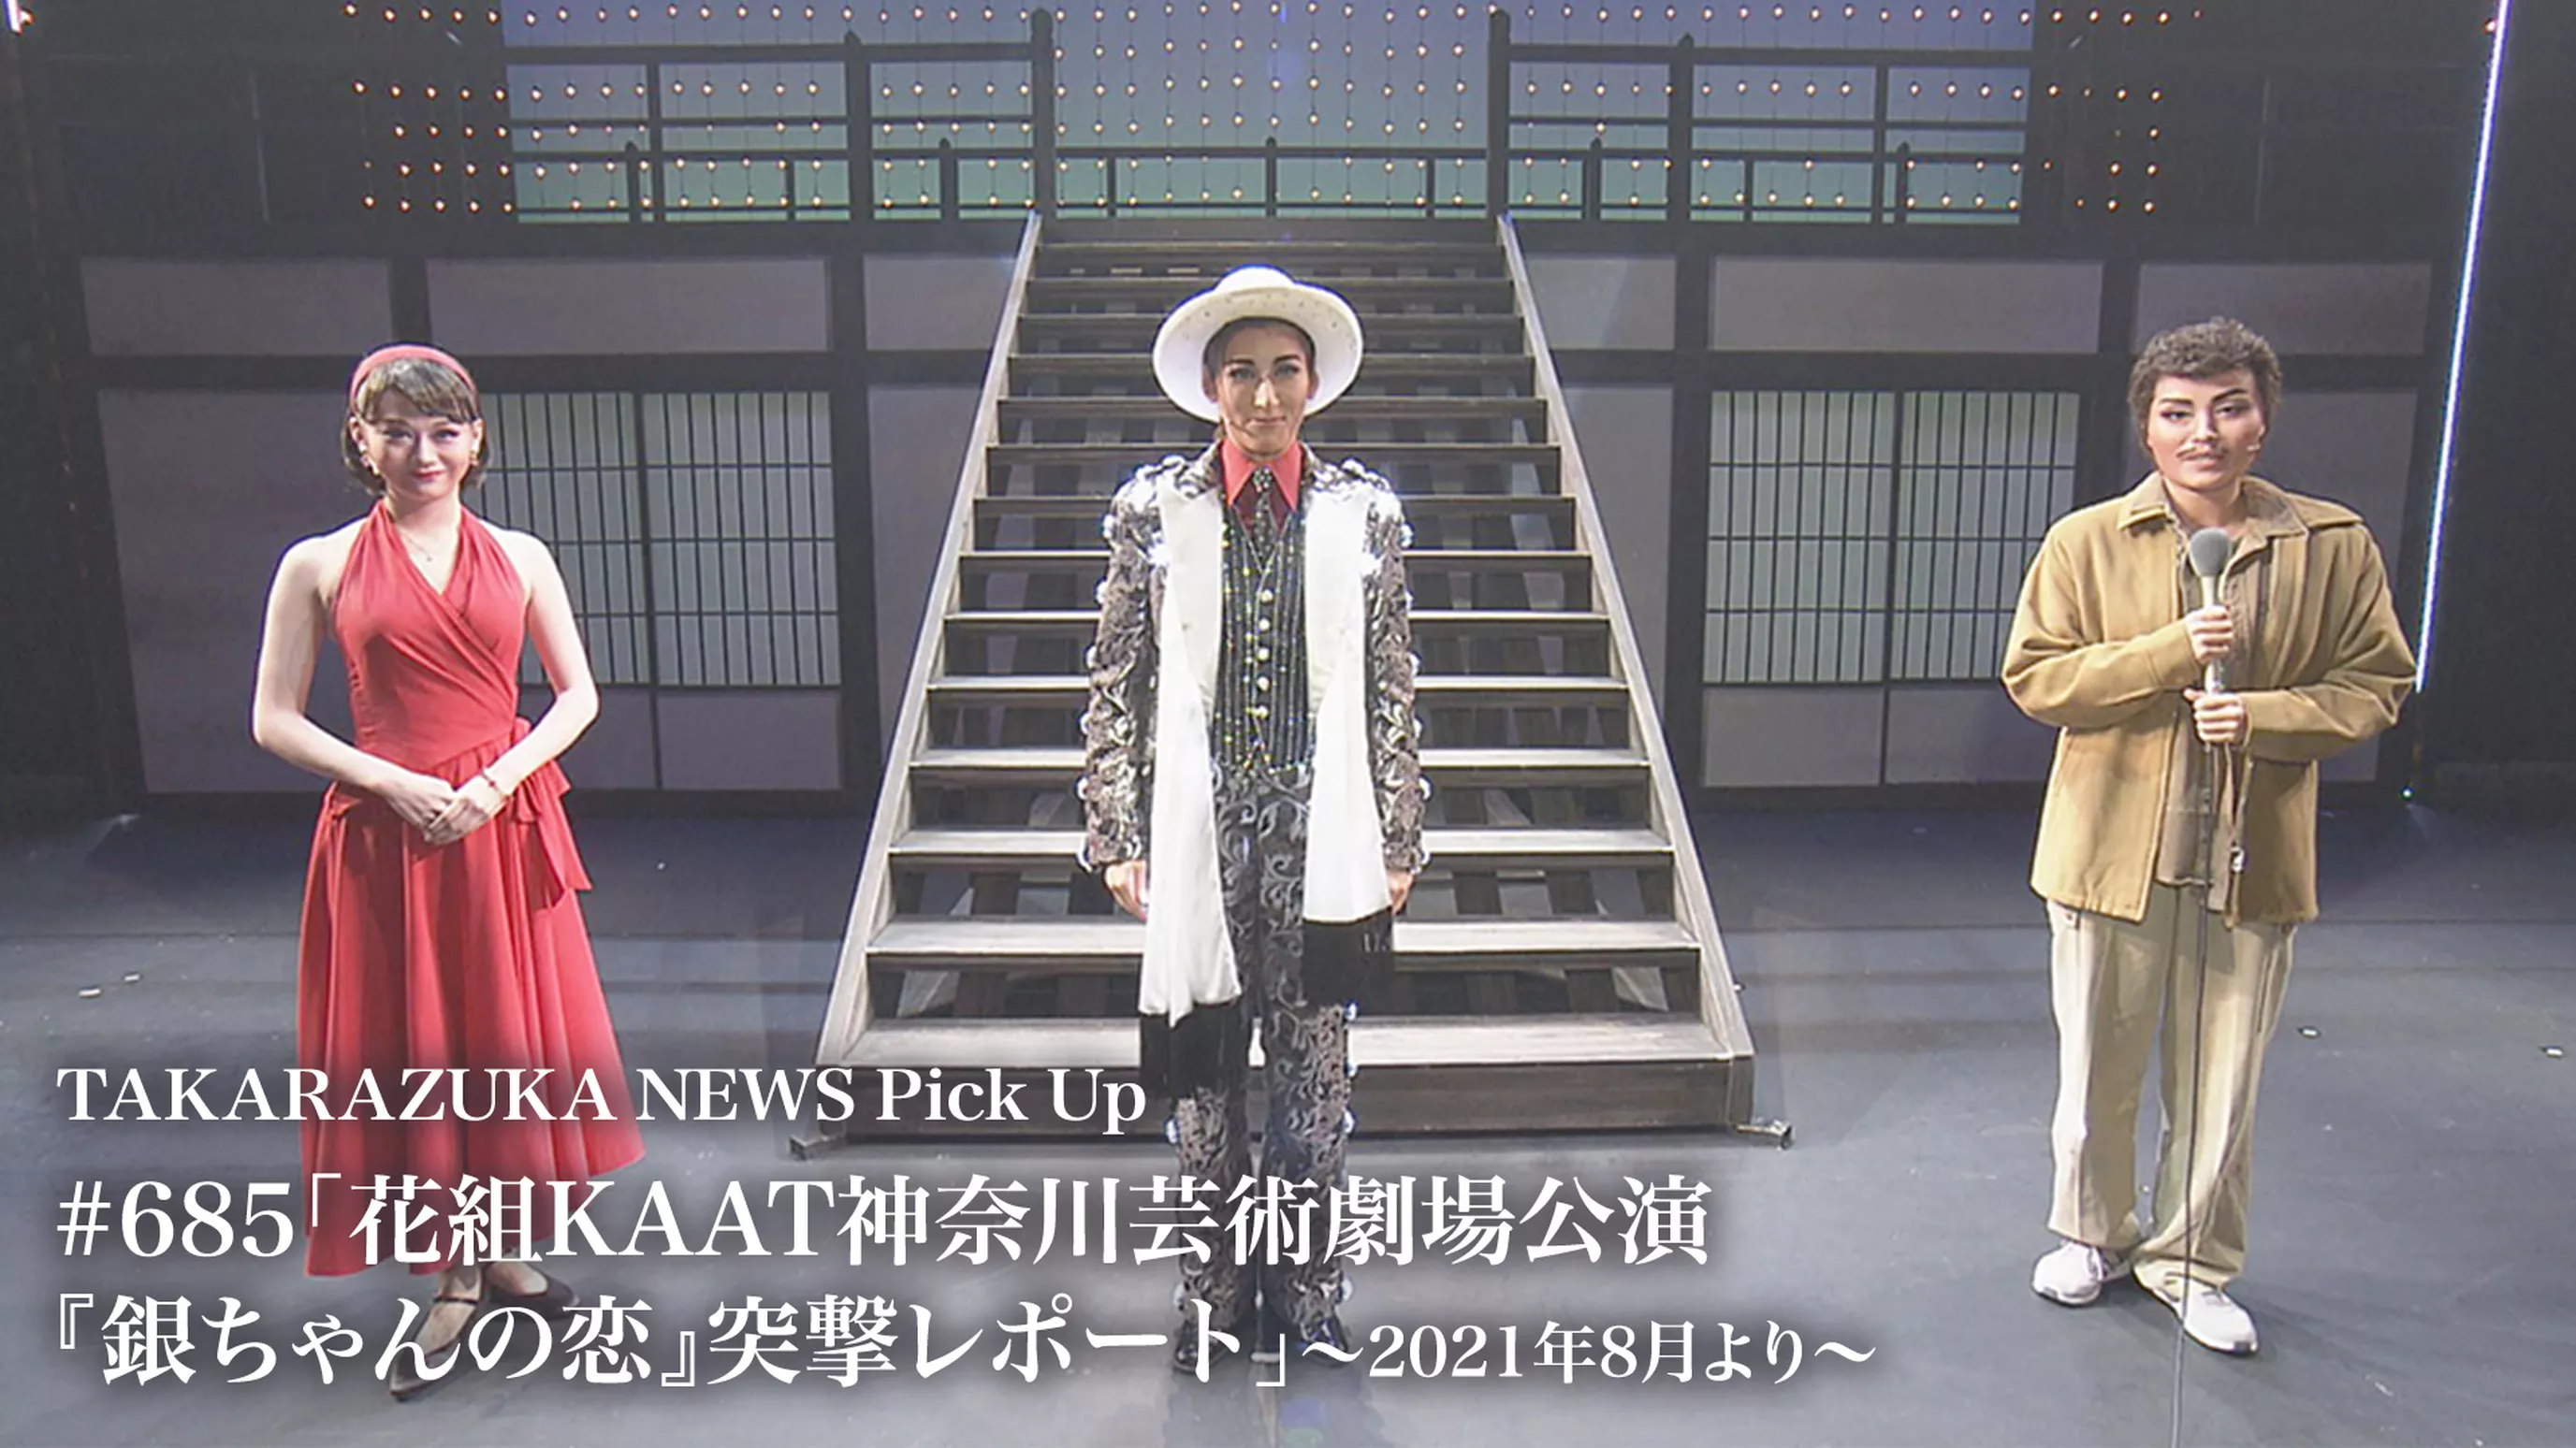 TAKARAZUKA NEWS Pick Up #685「花組KAAT神奈川芸術劇場公演『銀ちゃんの恋』突撃レポート」～2021年8月より～